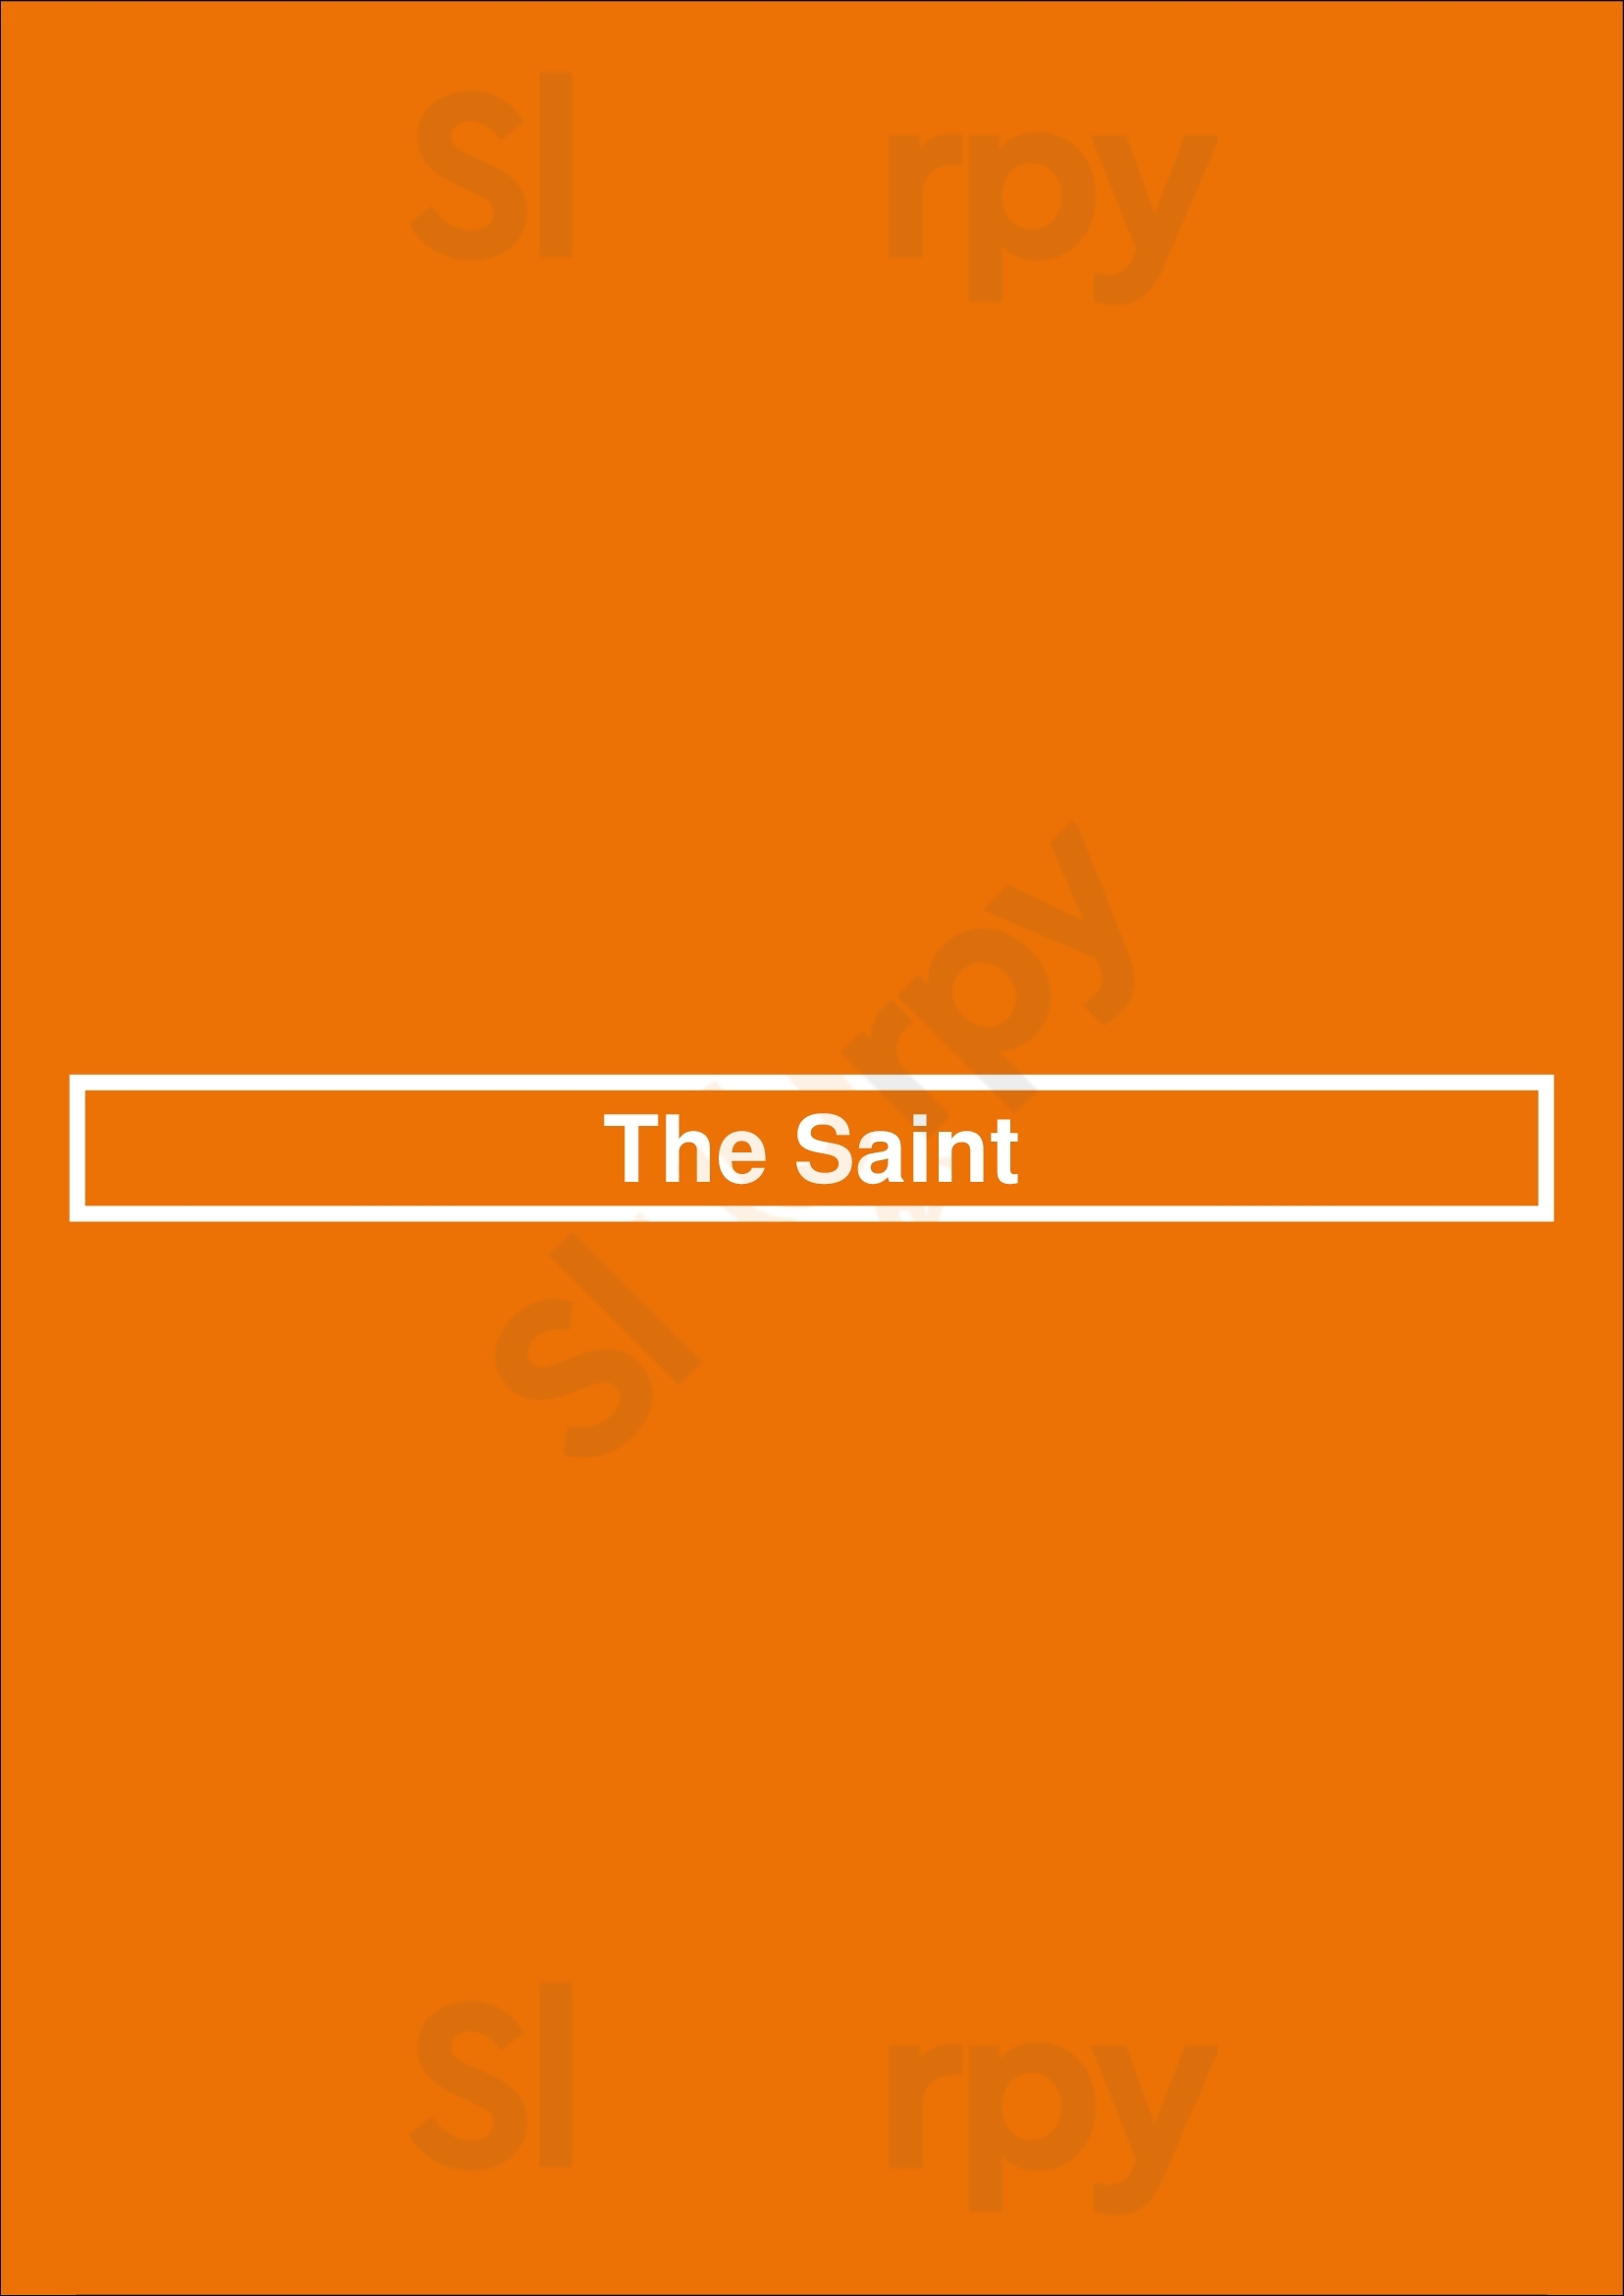 The Saint St. Helena Menu - 1